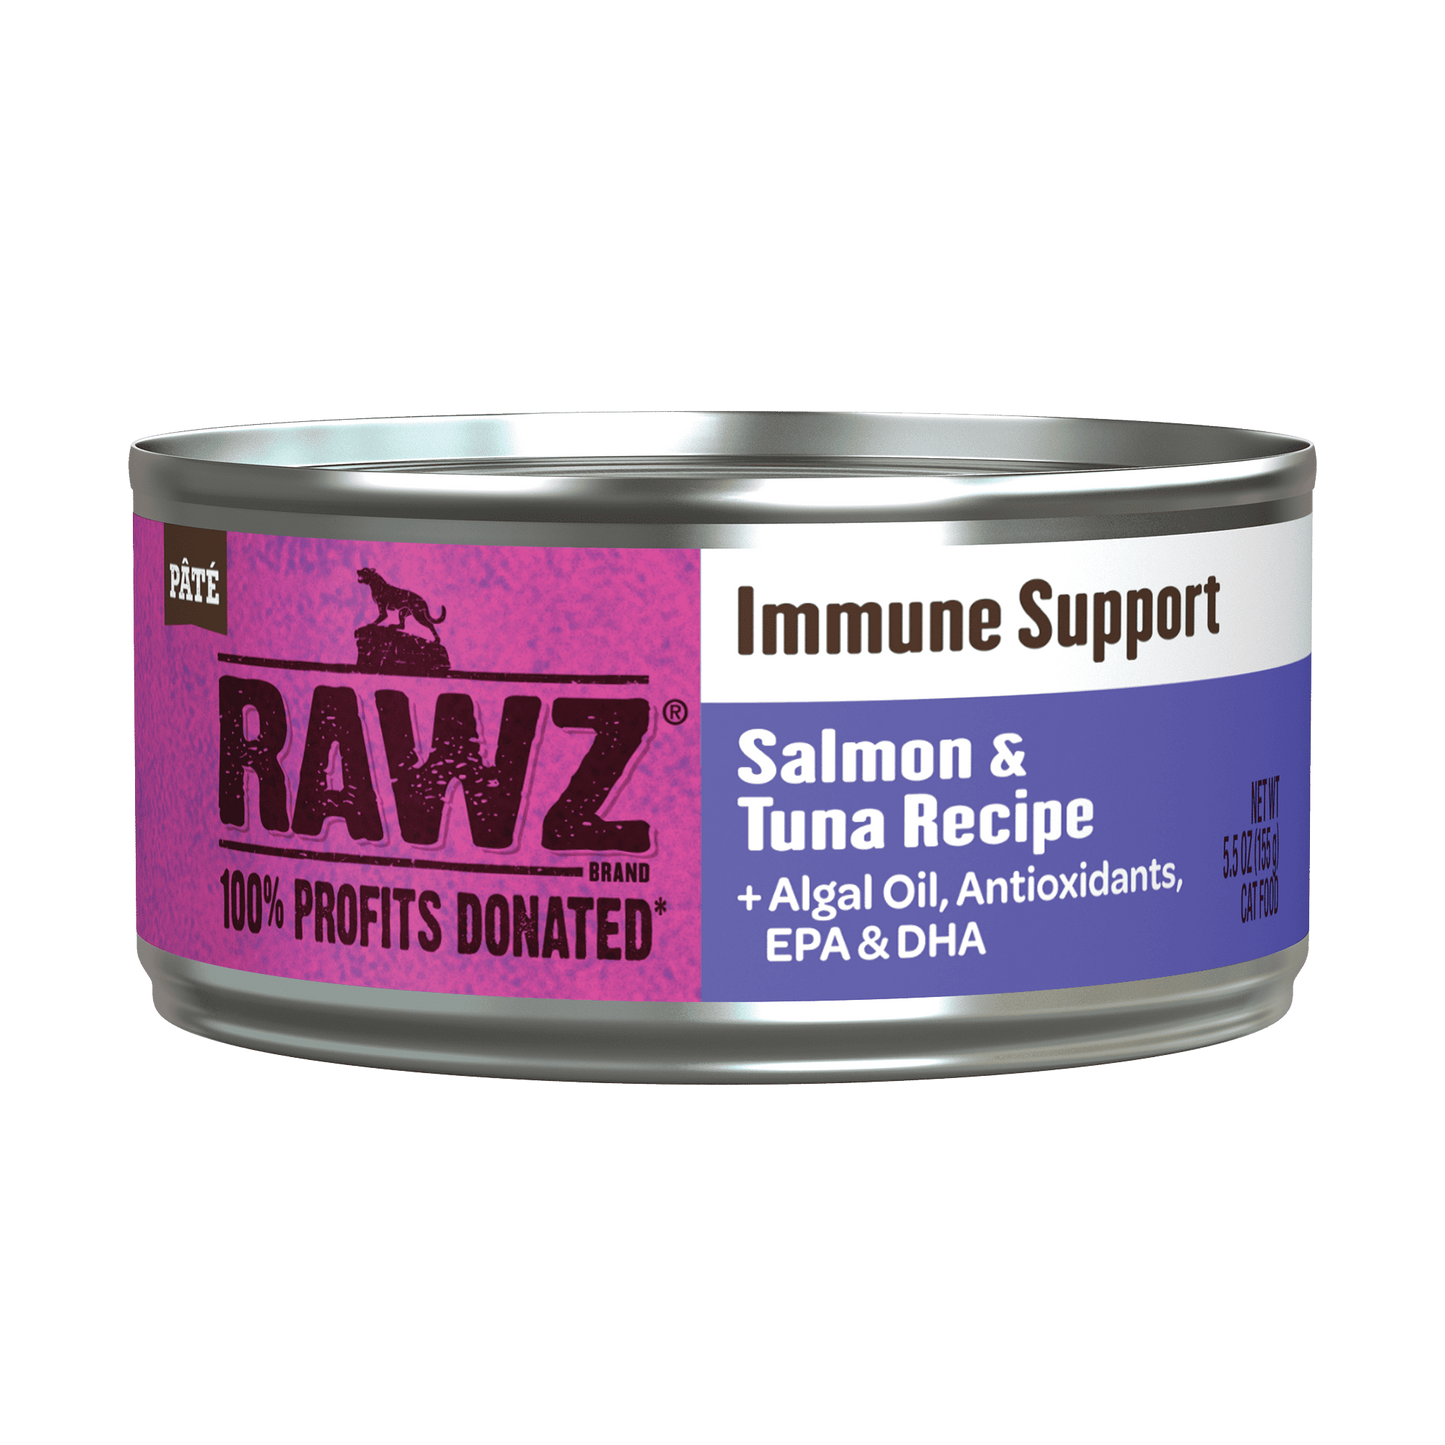 RAWZ Immune Support Salmon & Tuna Canned Cat Food